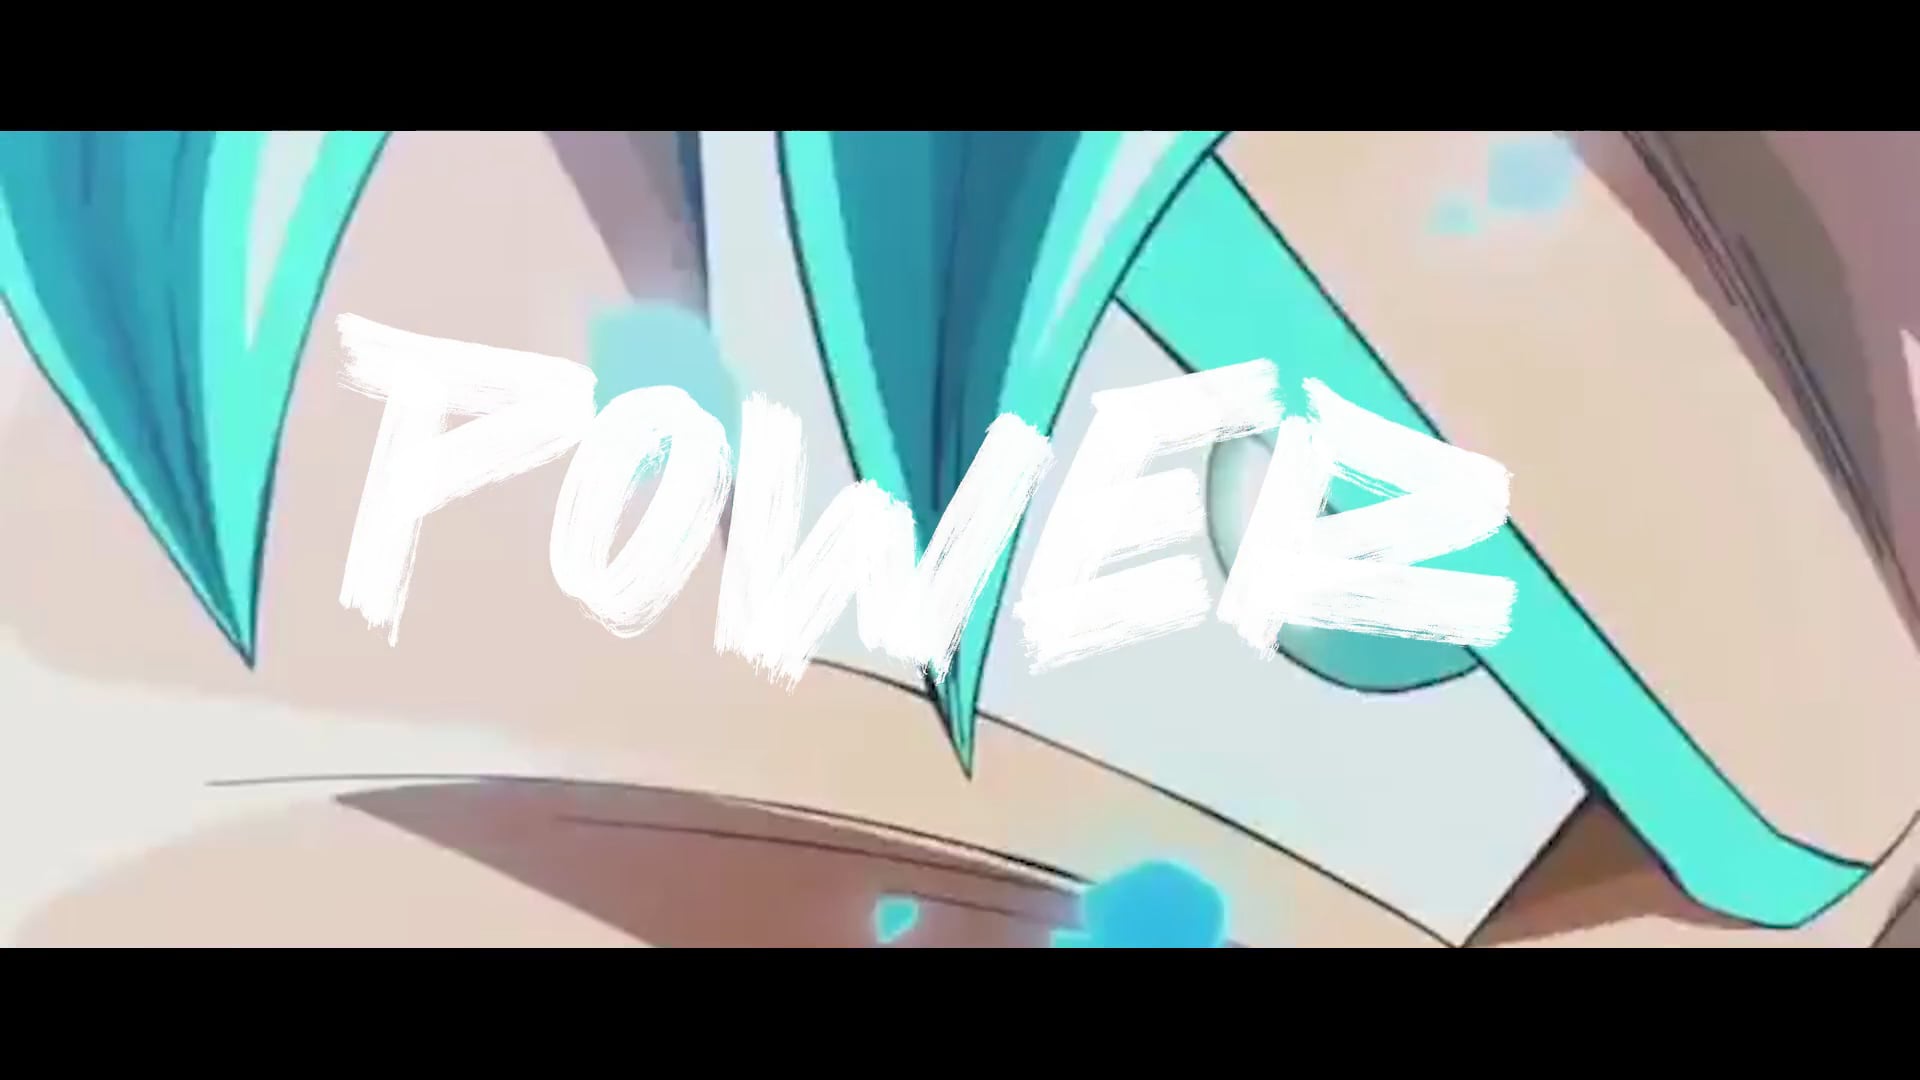 Powerade - Your Power Beats Winning